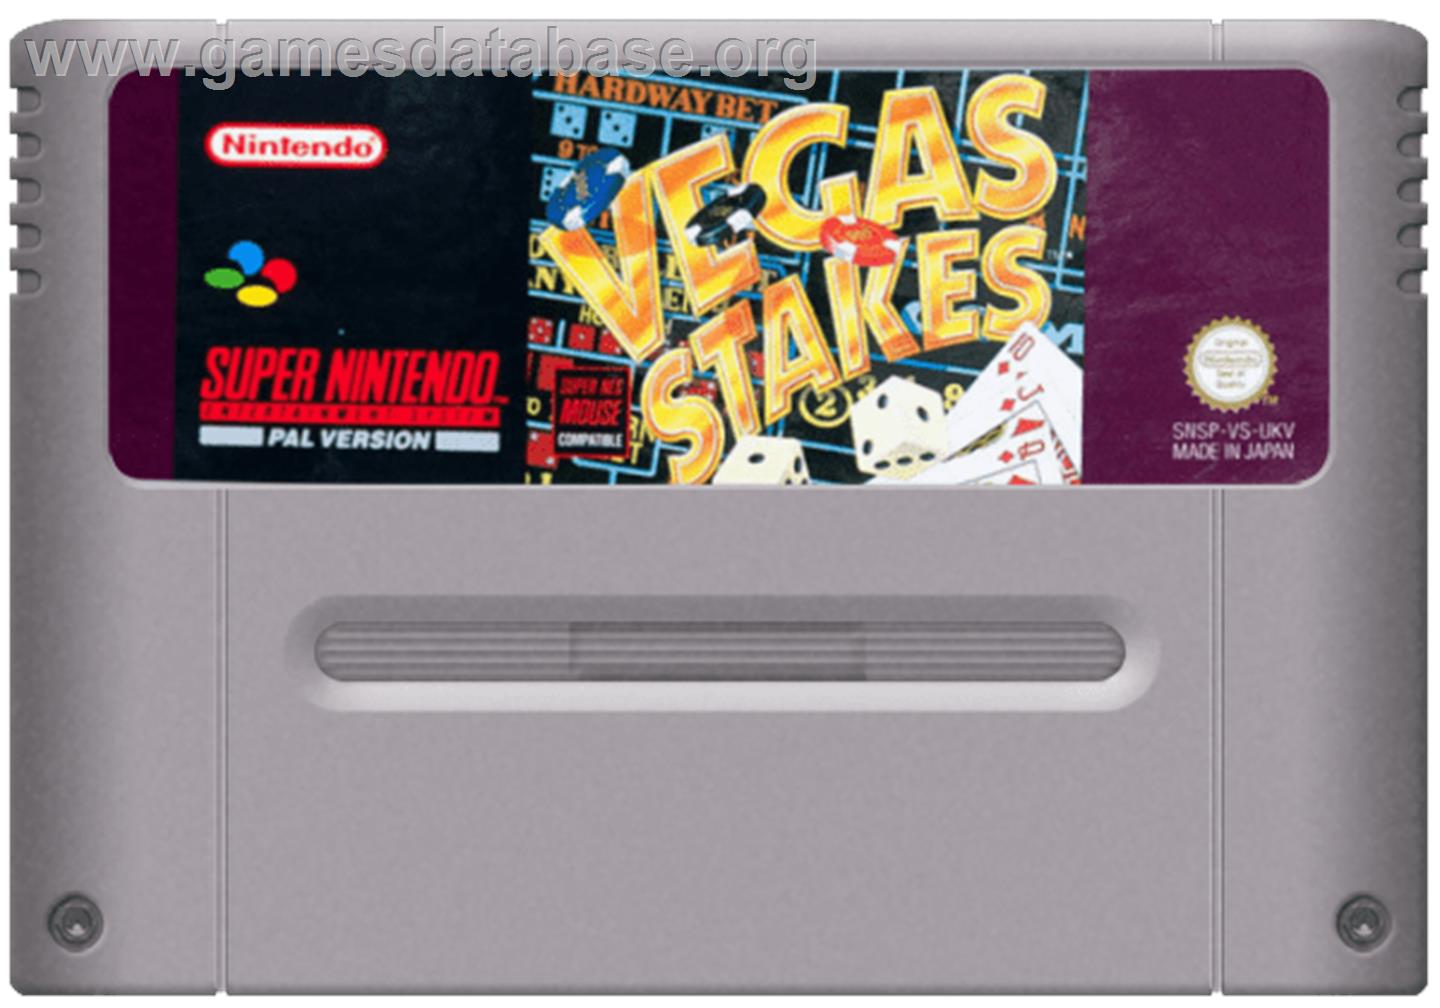 Vegas Stakes - Nintendo SNES - Artwork - Cartridge